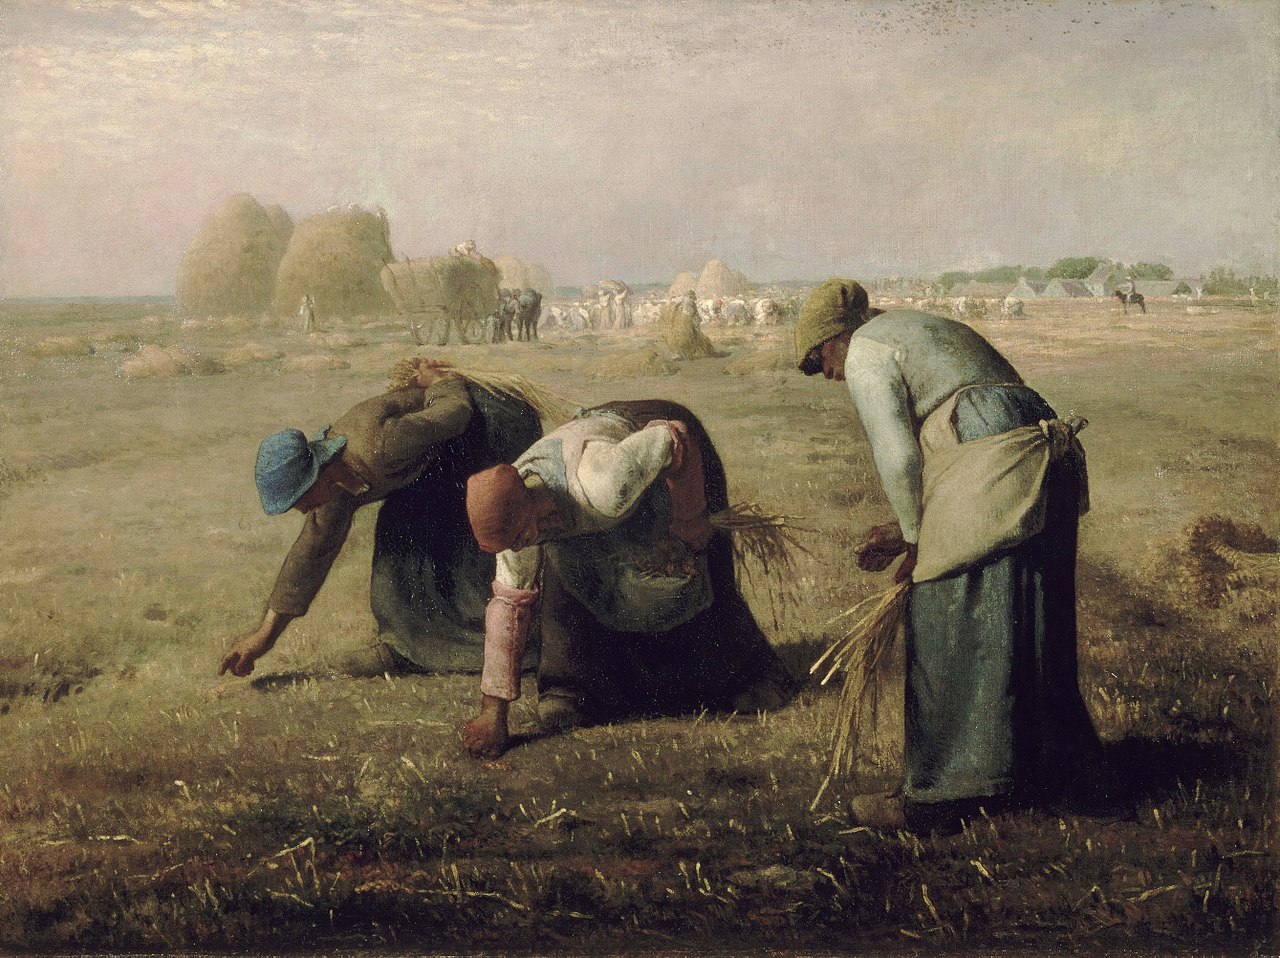 Jean-François Millet, Le spigolatrici (1857; olio su tela, 83,8 x 111,8 cm; Parigi, Musée d'Orsay)